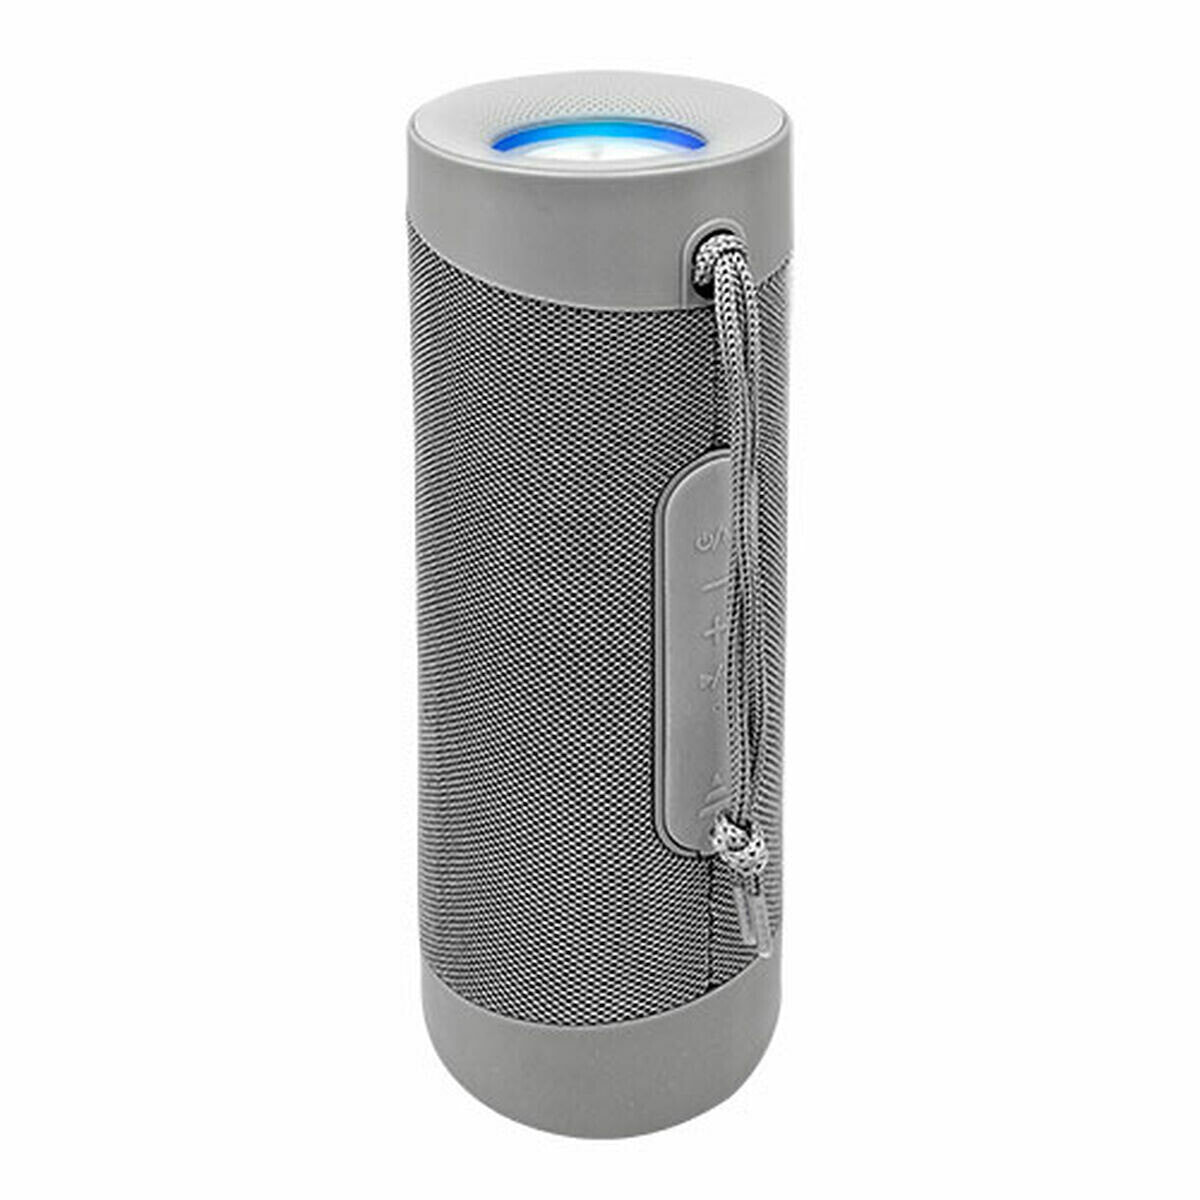 Portable Bluetooth Speakers Denver Electronics 111151020550 10W Grey Silver